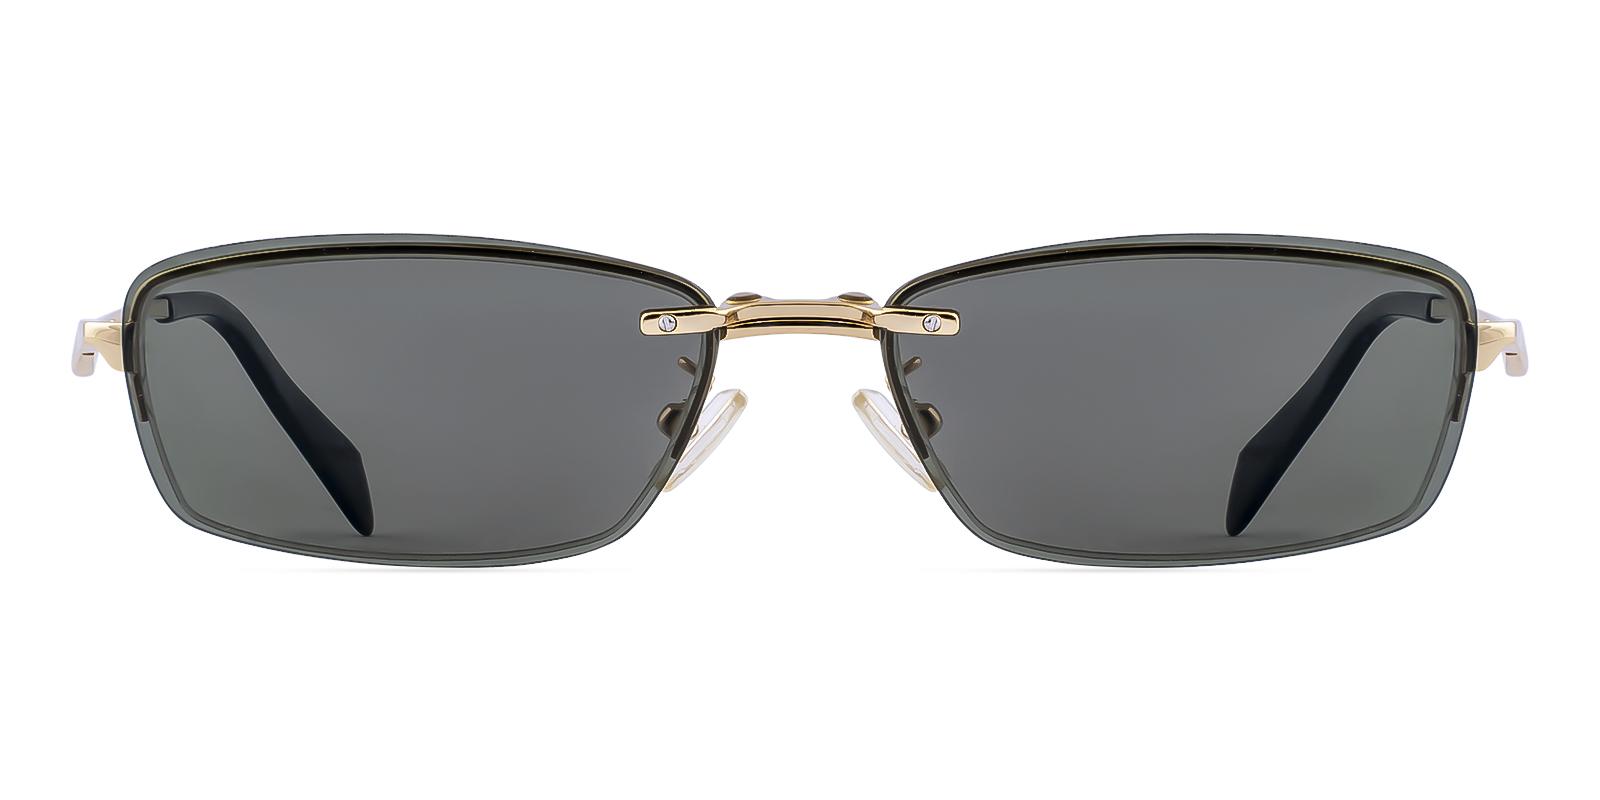 Terant Clip-On Gold Metal Eyeglasses , NosePads Frames from ABBE Glasses